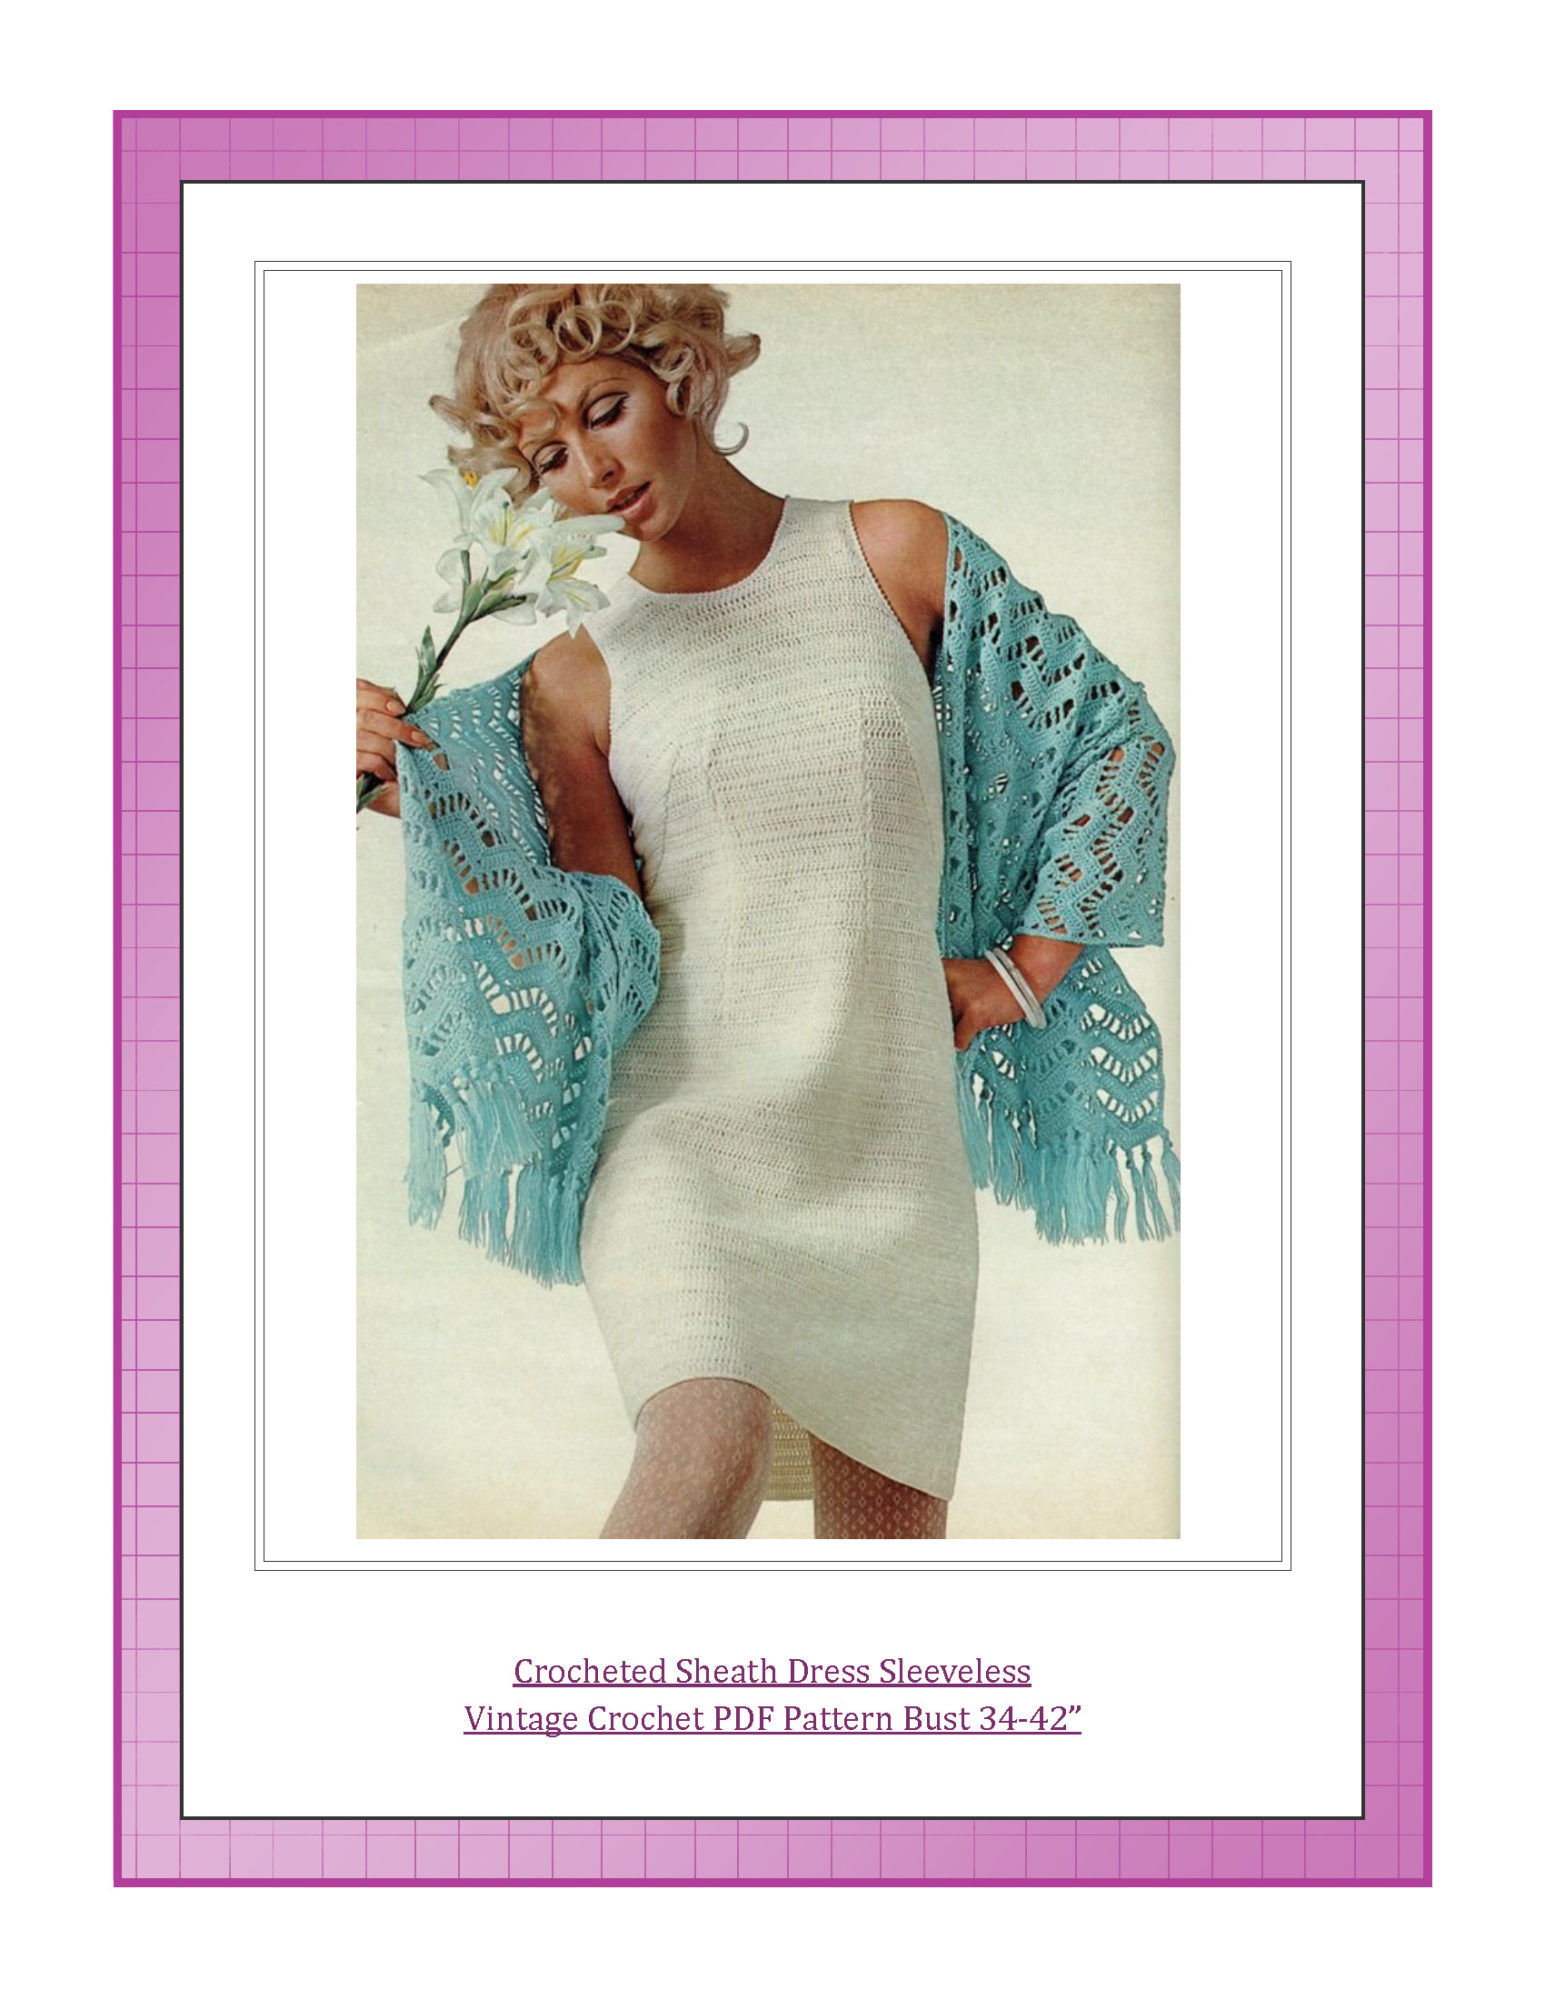 pdf 2 vintage 70s crochet bag patterns